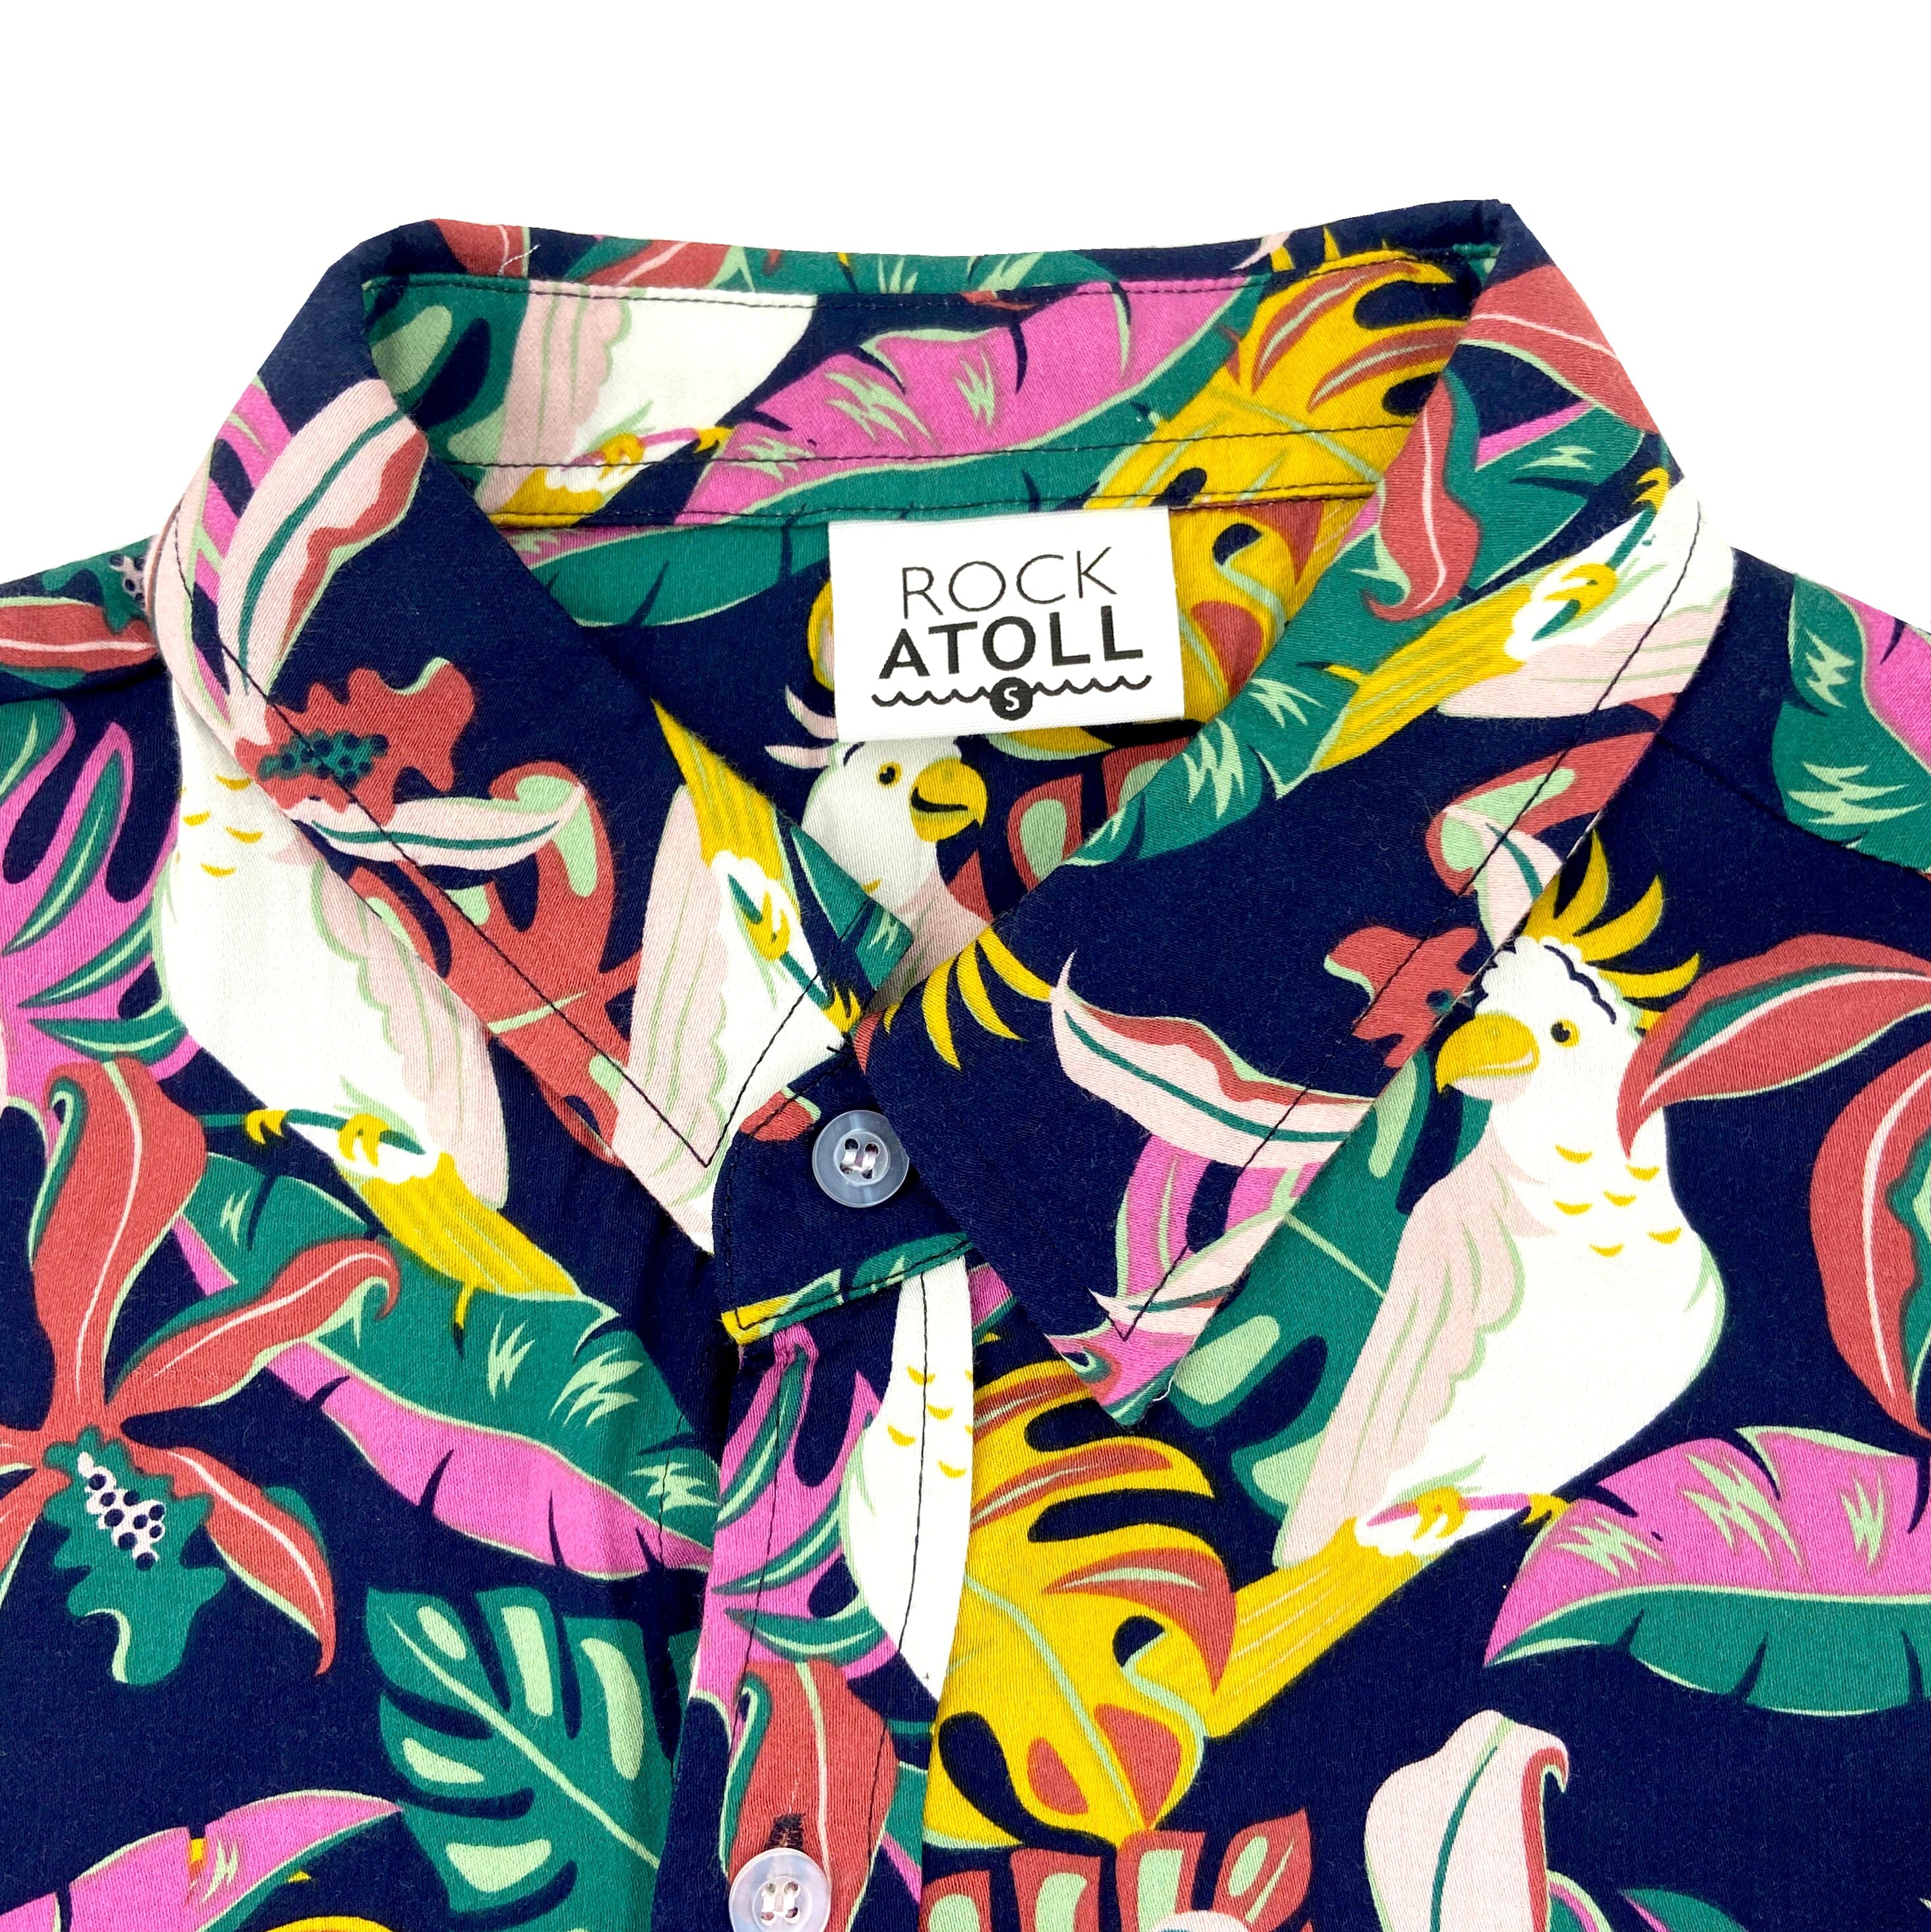 Men's Bold Colorful Floral Parrot Cockatoo Button Down Hawaiian Shirt